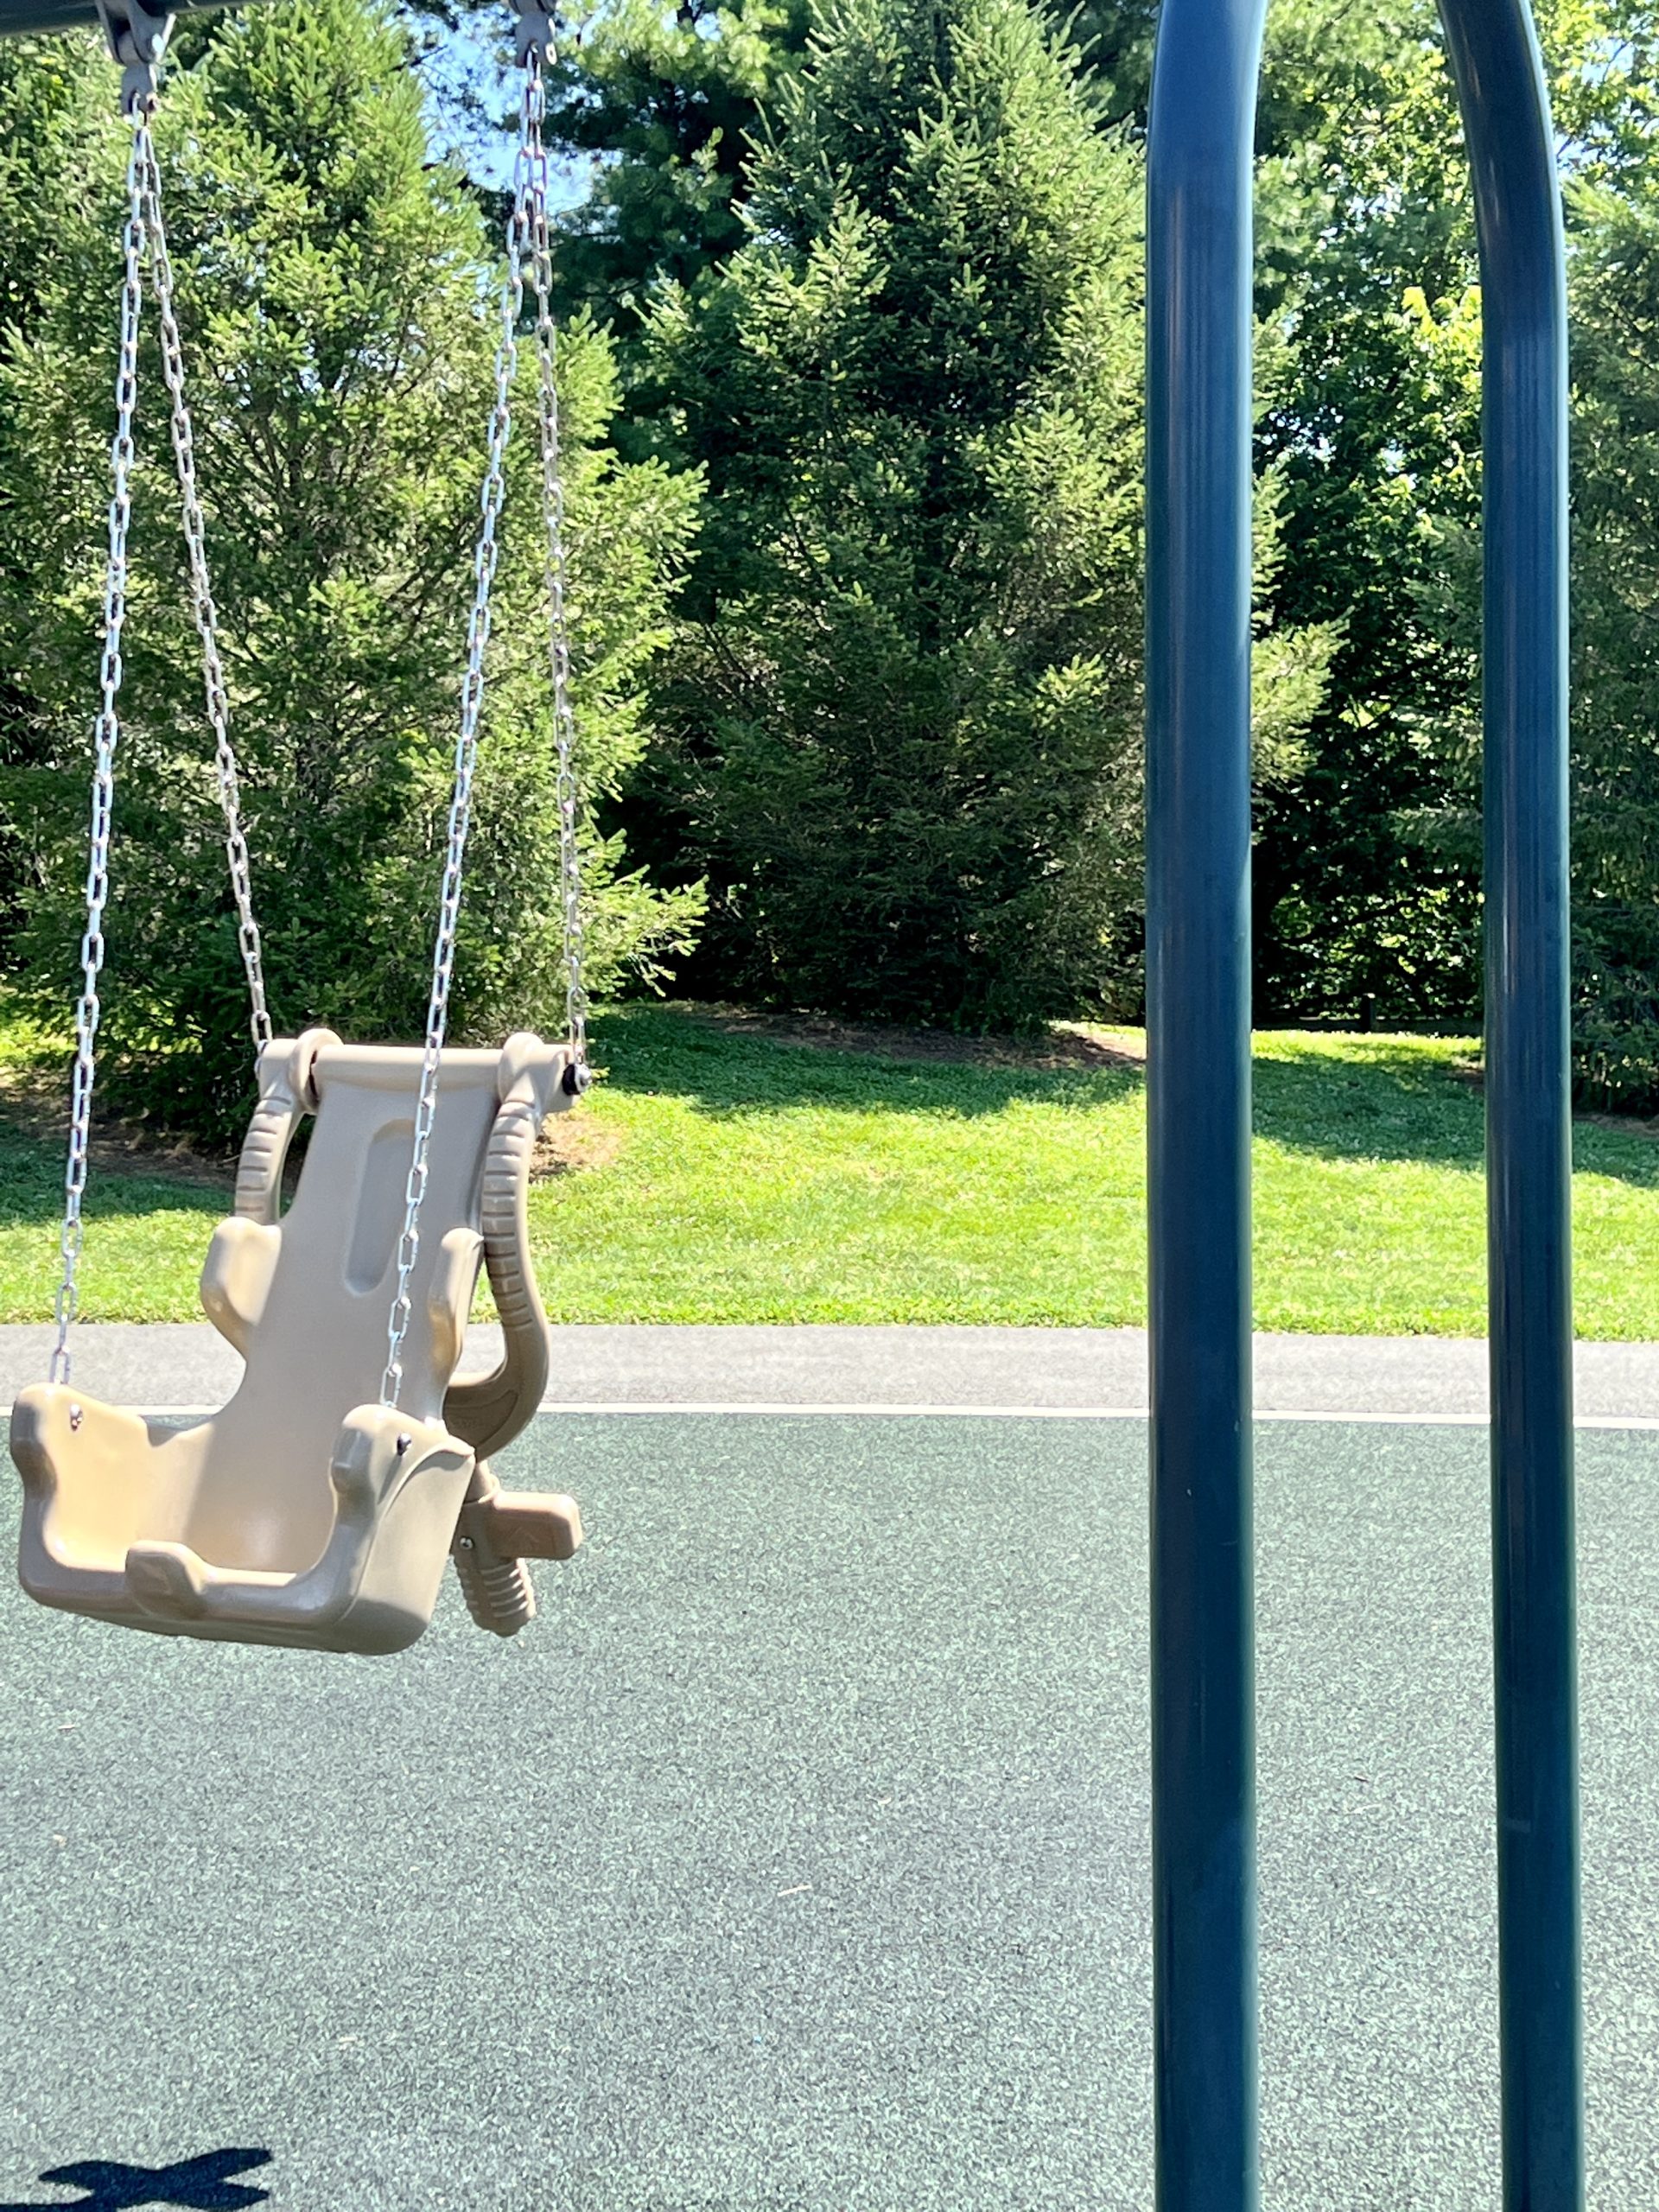 Ponderosa Farm Park Playground in Scotch Plains NJ swing accessible swing